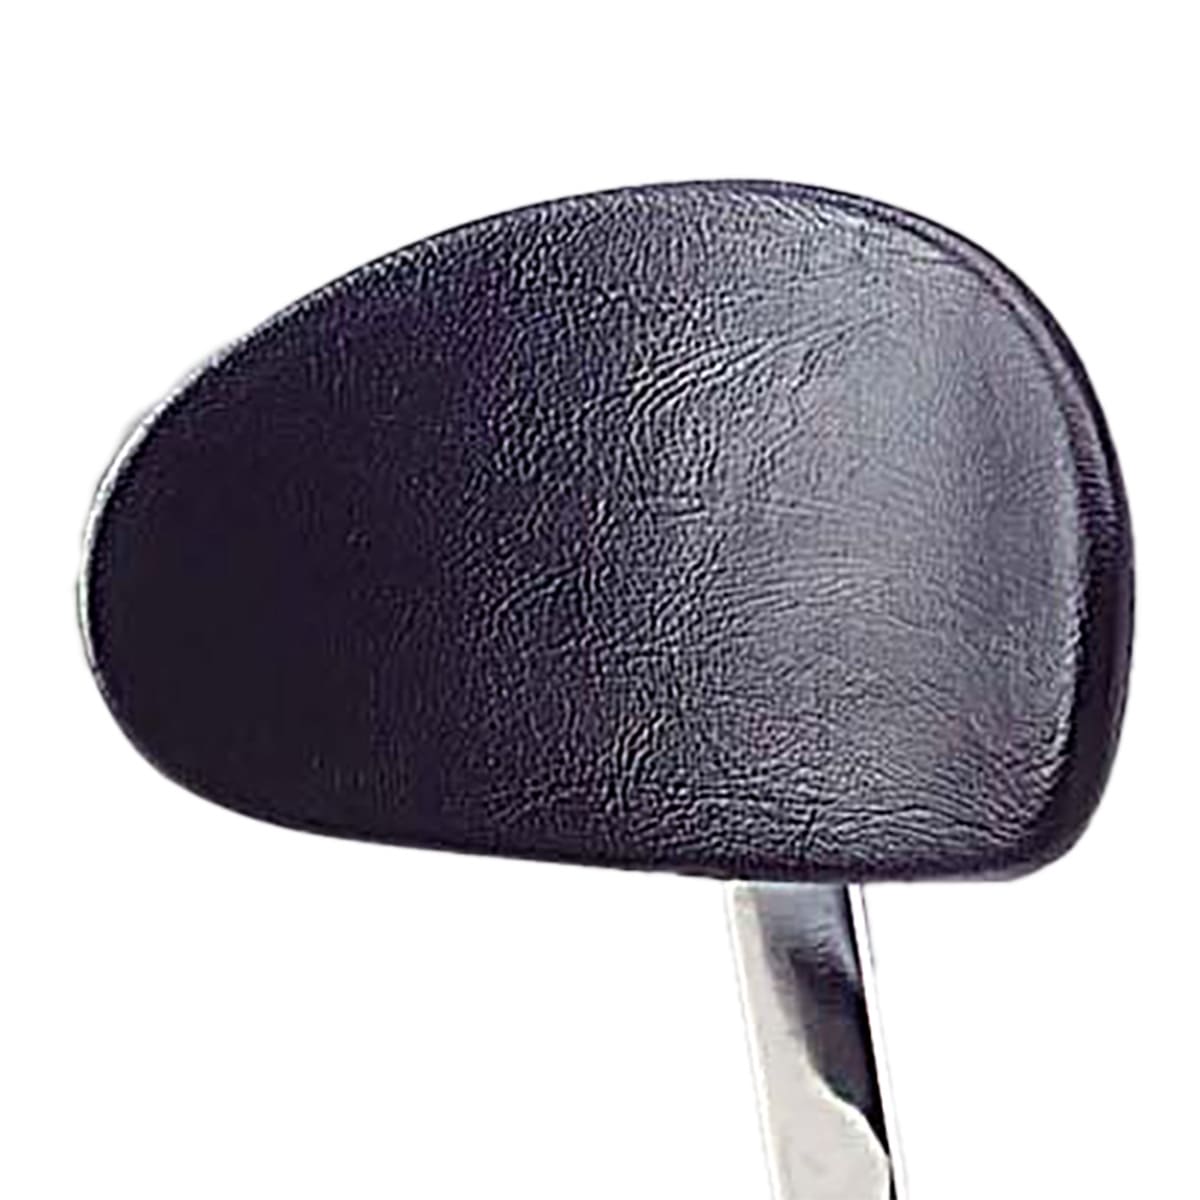 Black polyurethane backrest for 60 range